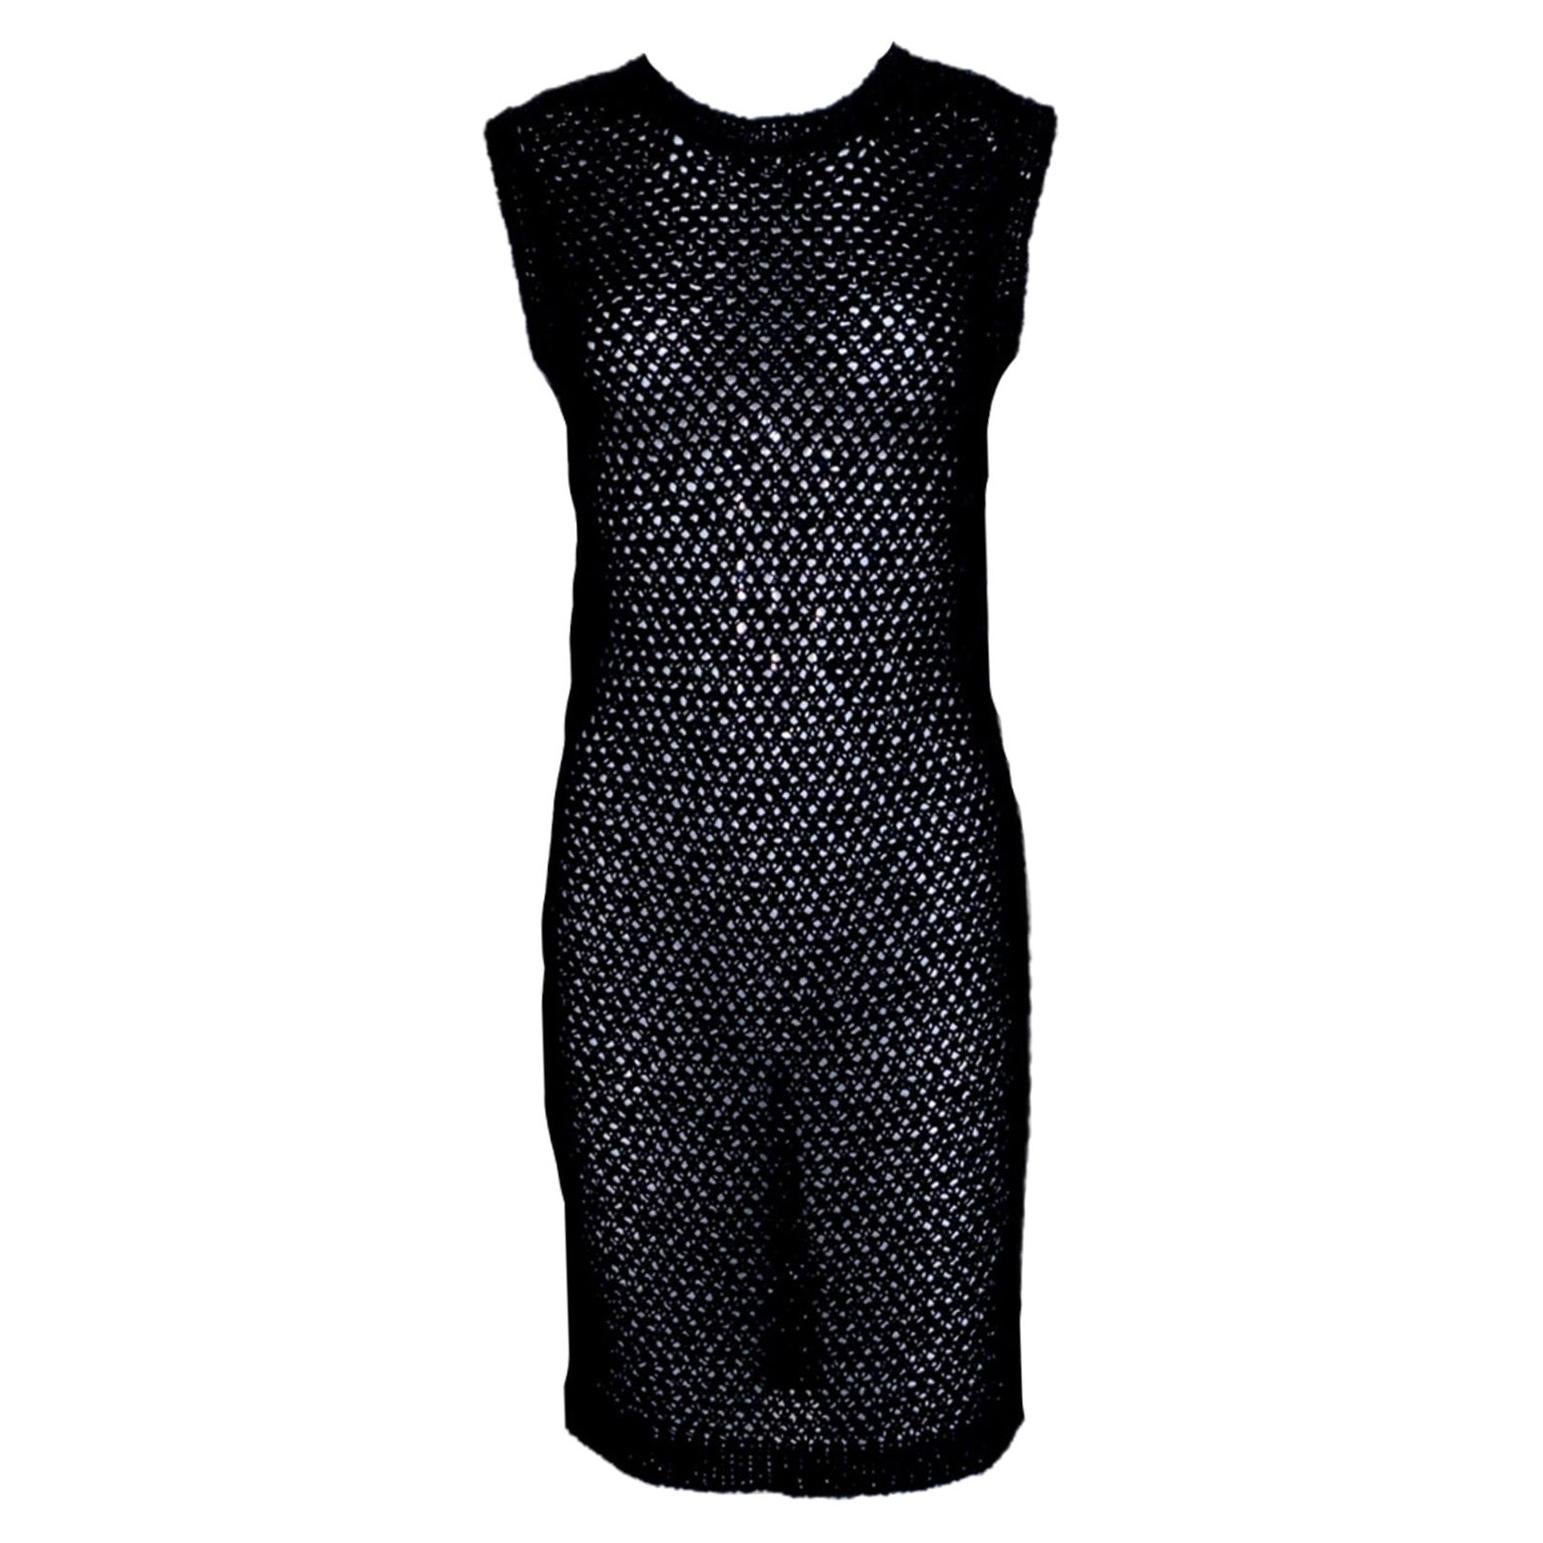 NEW Chanel Black Crochet Knit Dress including slip dress 38